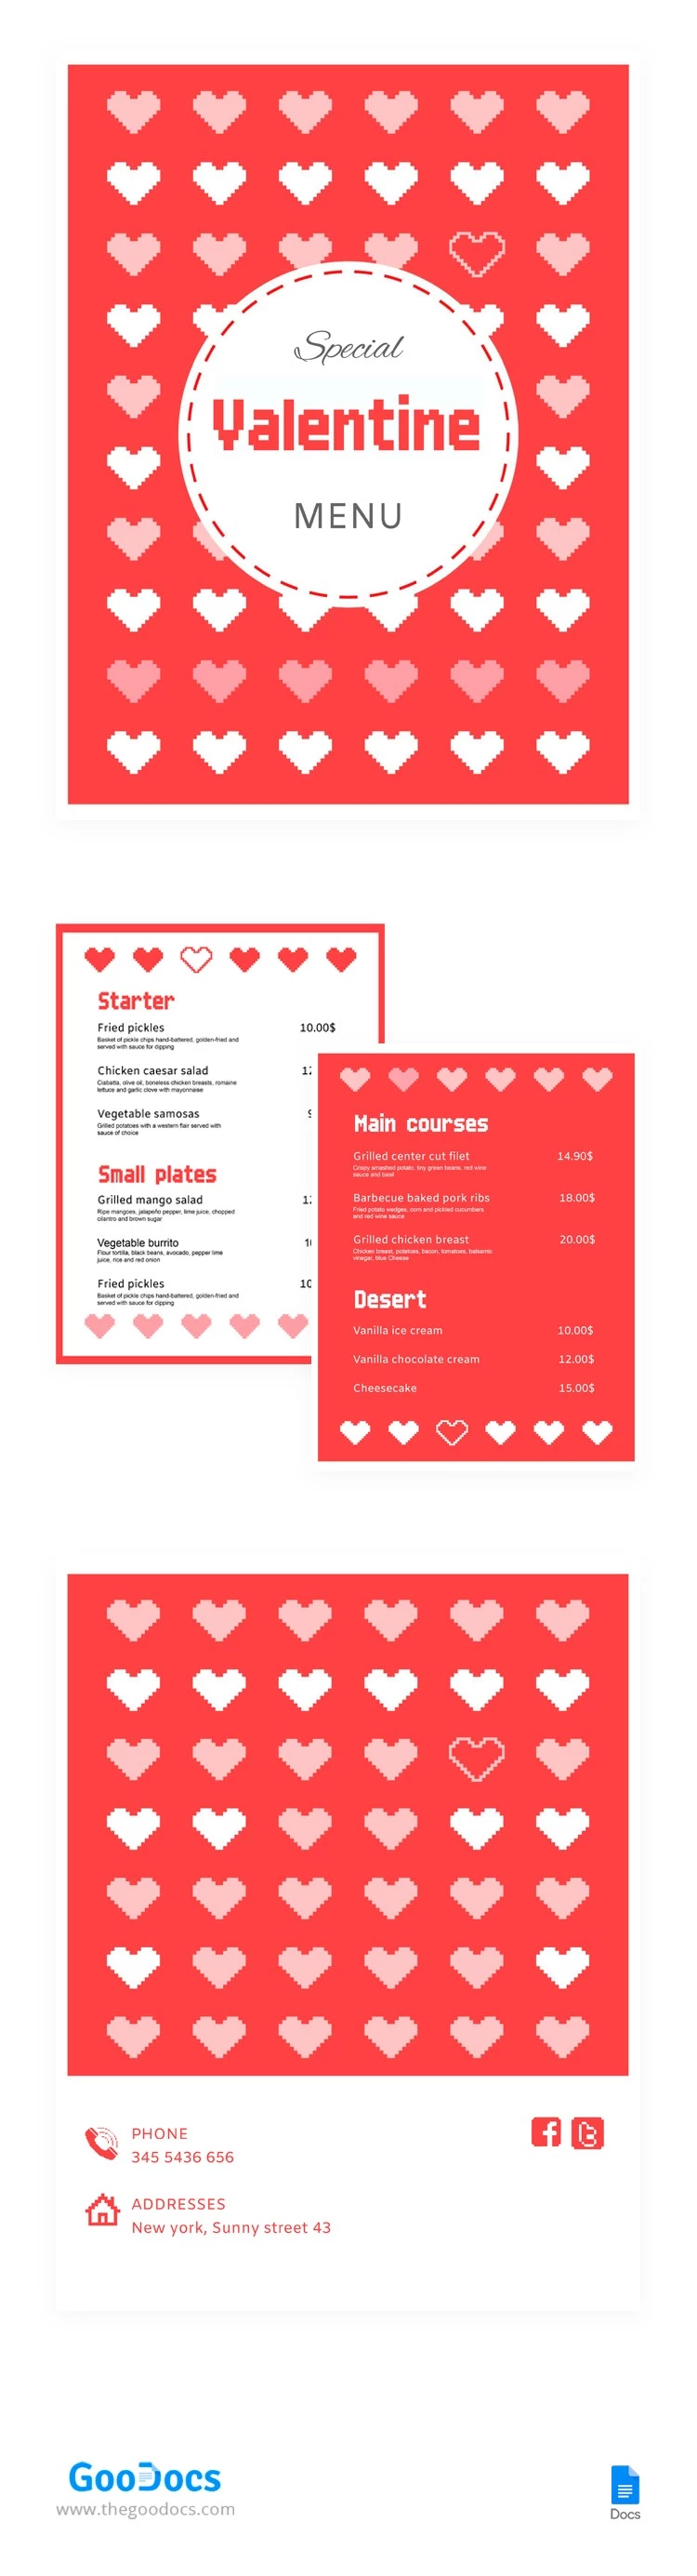 Pixel Valentine Menu - free Google Docs Template - 10062892